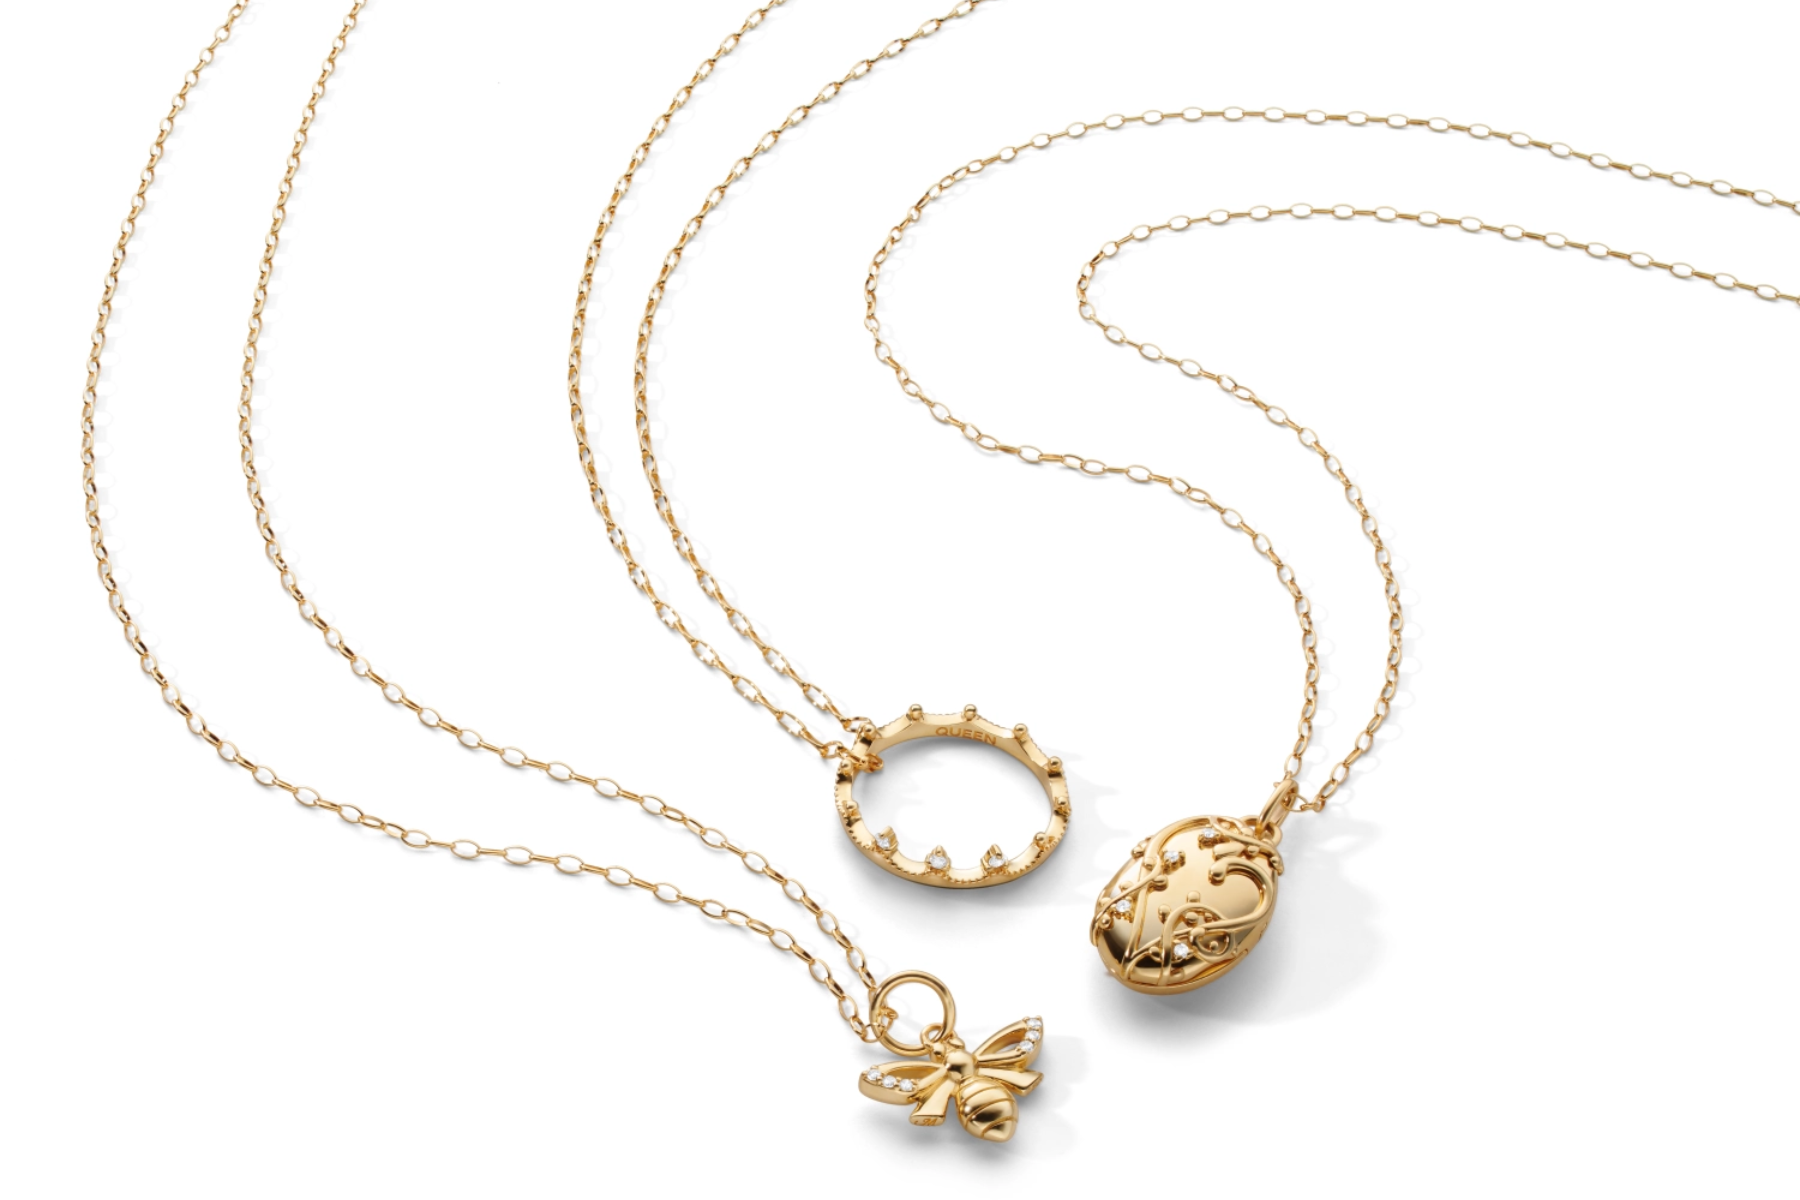 Three 18-karat gold necklaces in different styles